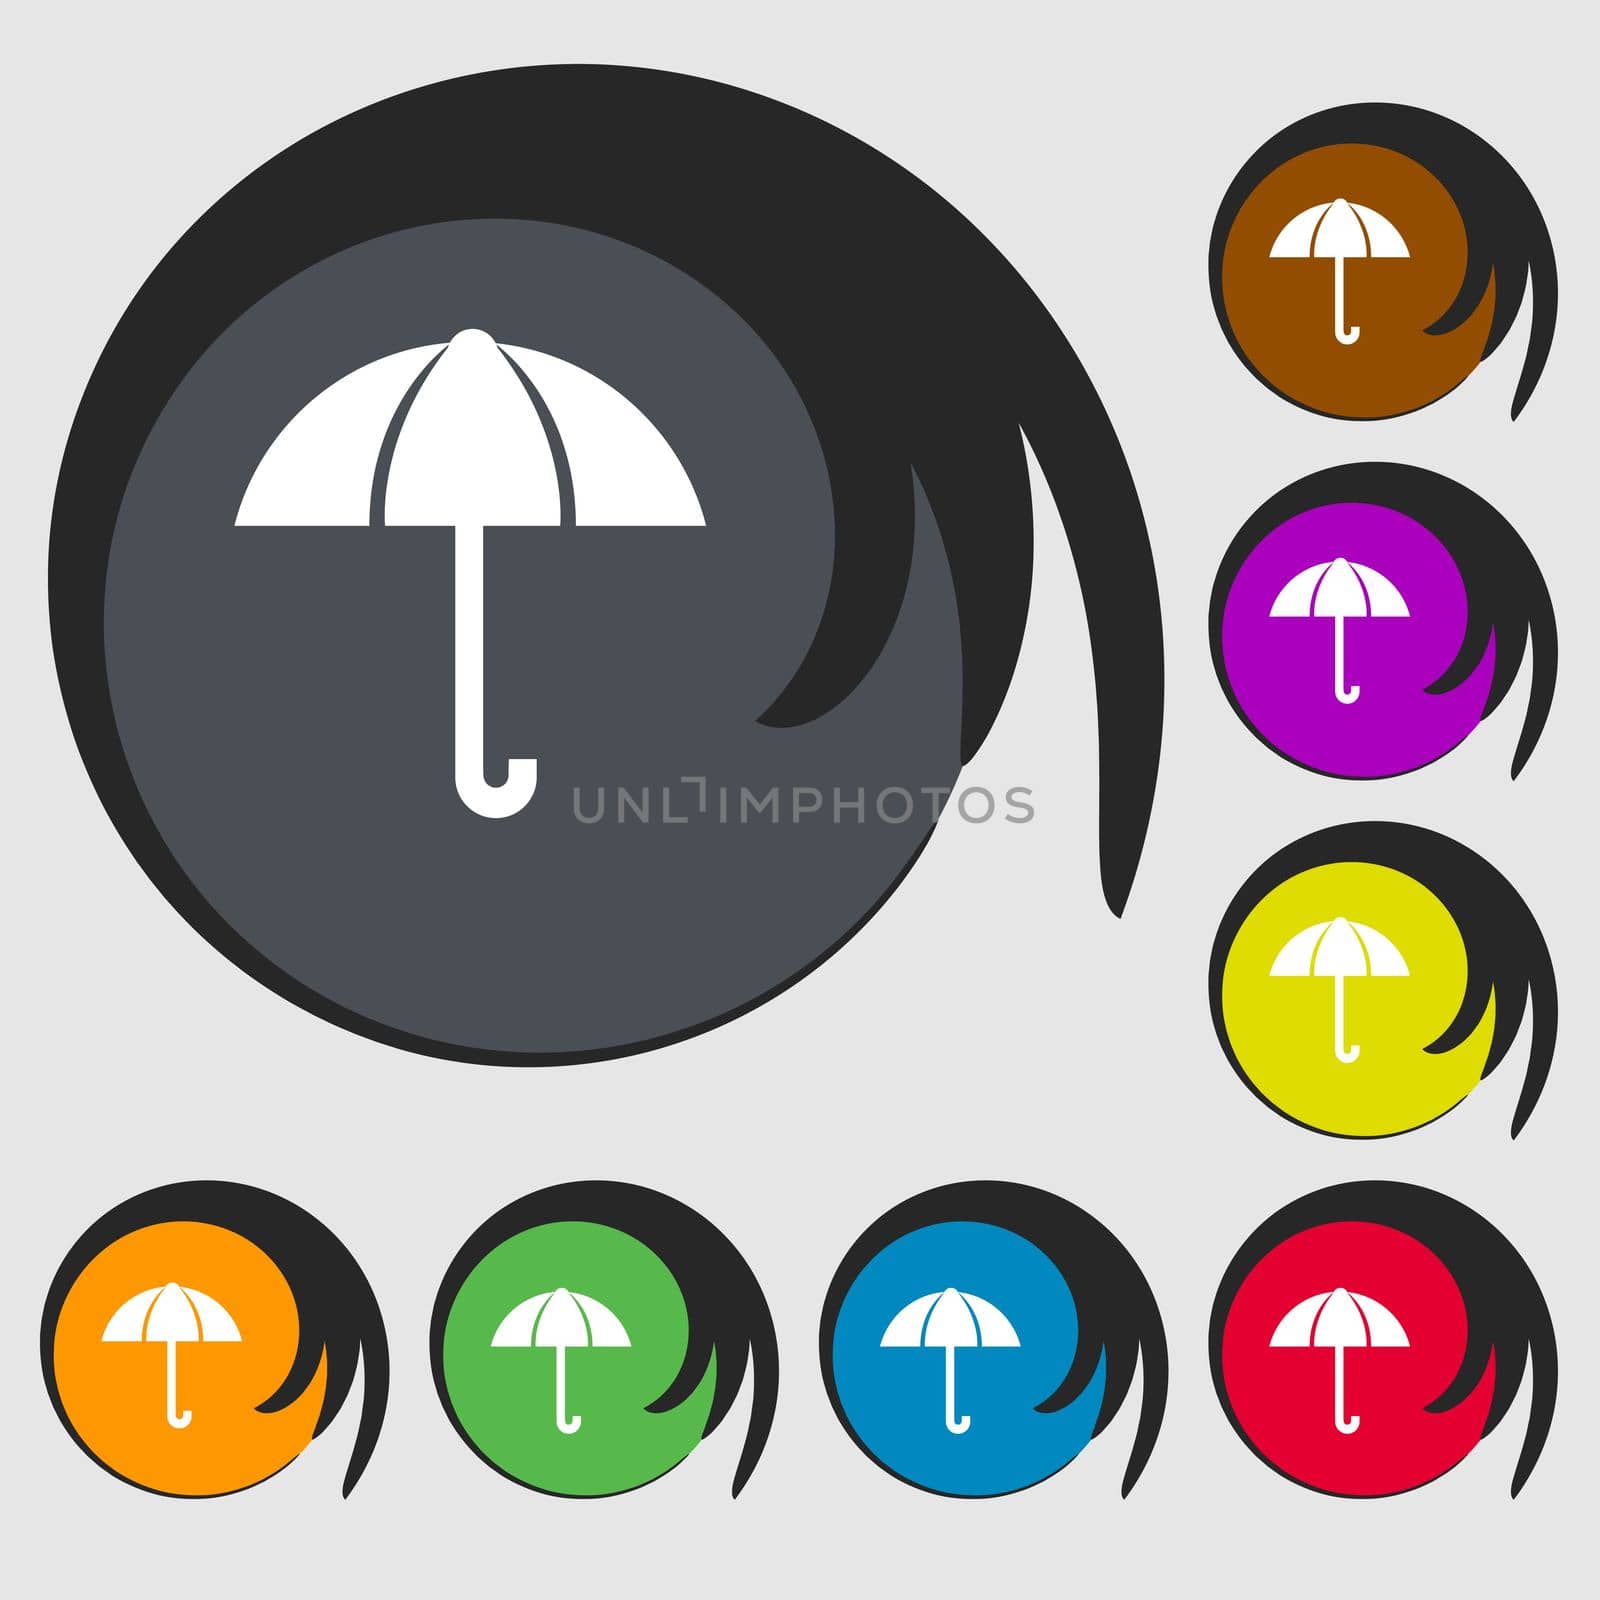 Umbrella sign icon. Rain protection symbol. Symbols on eight colored buttons. illustration